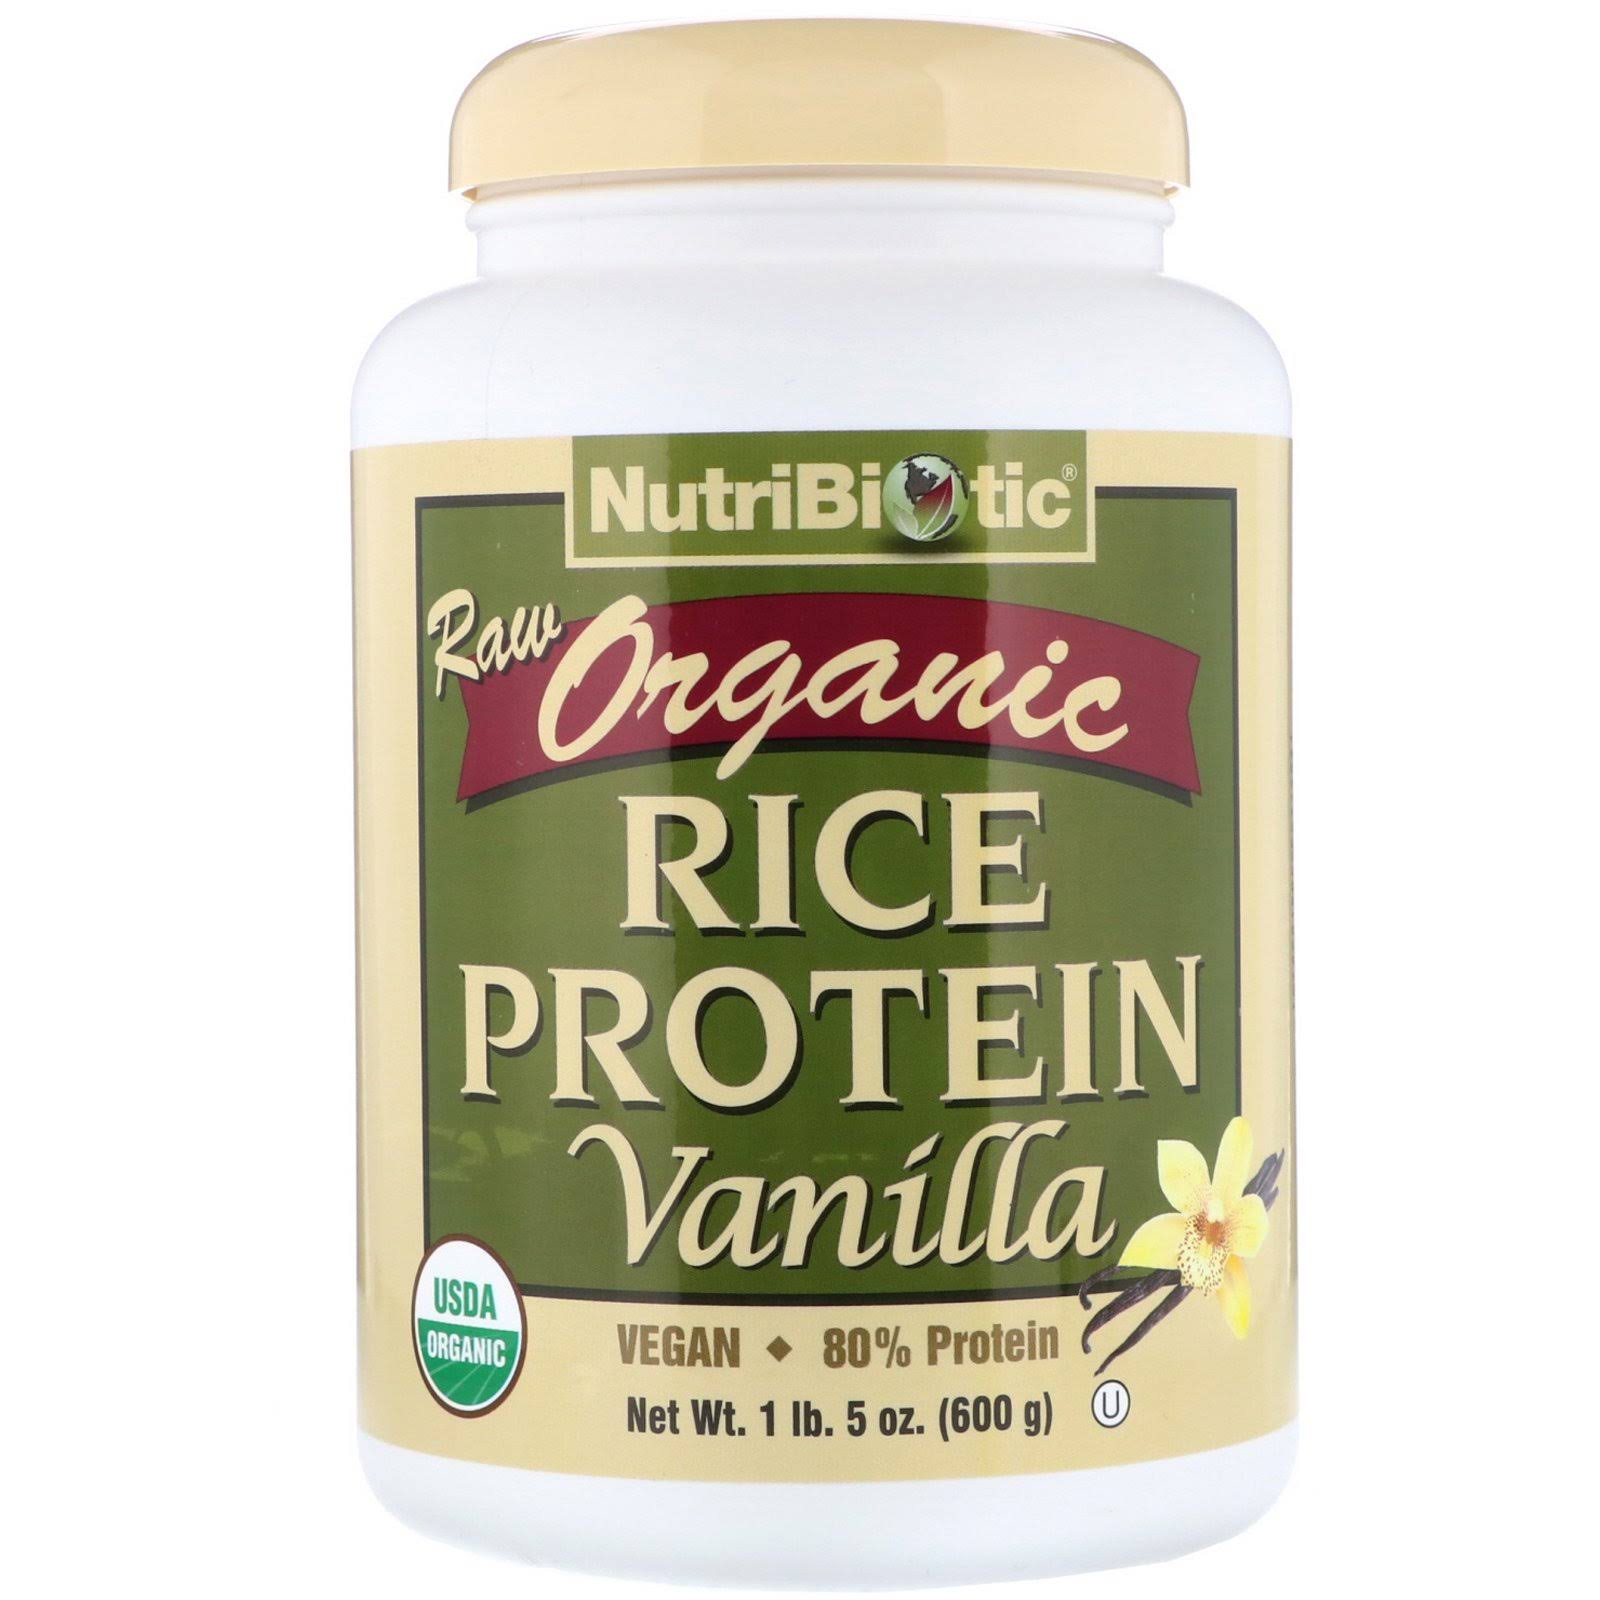 Nutribiotic Organic Rice Protein - Vanilla, 600g